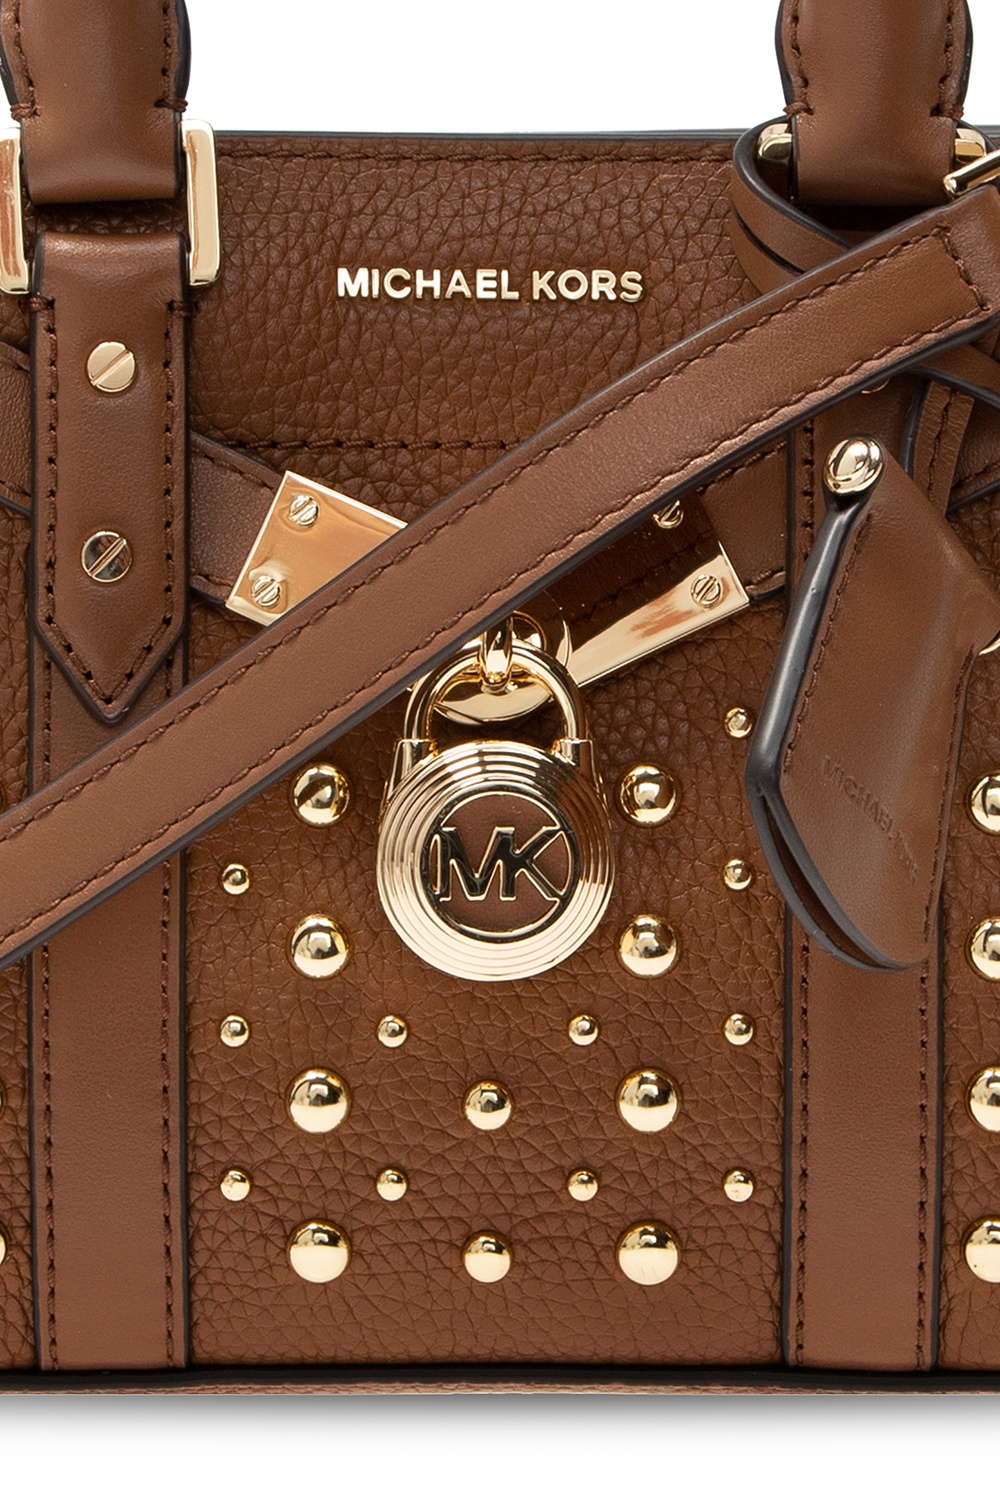 Michael Kors Hamilton Medium Satchel Shoulder Bag  Michael Kors bag   026651303734  Fash Brands